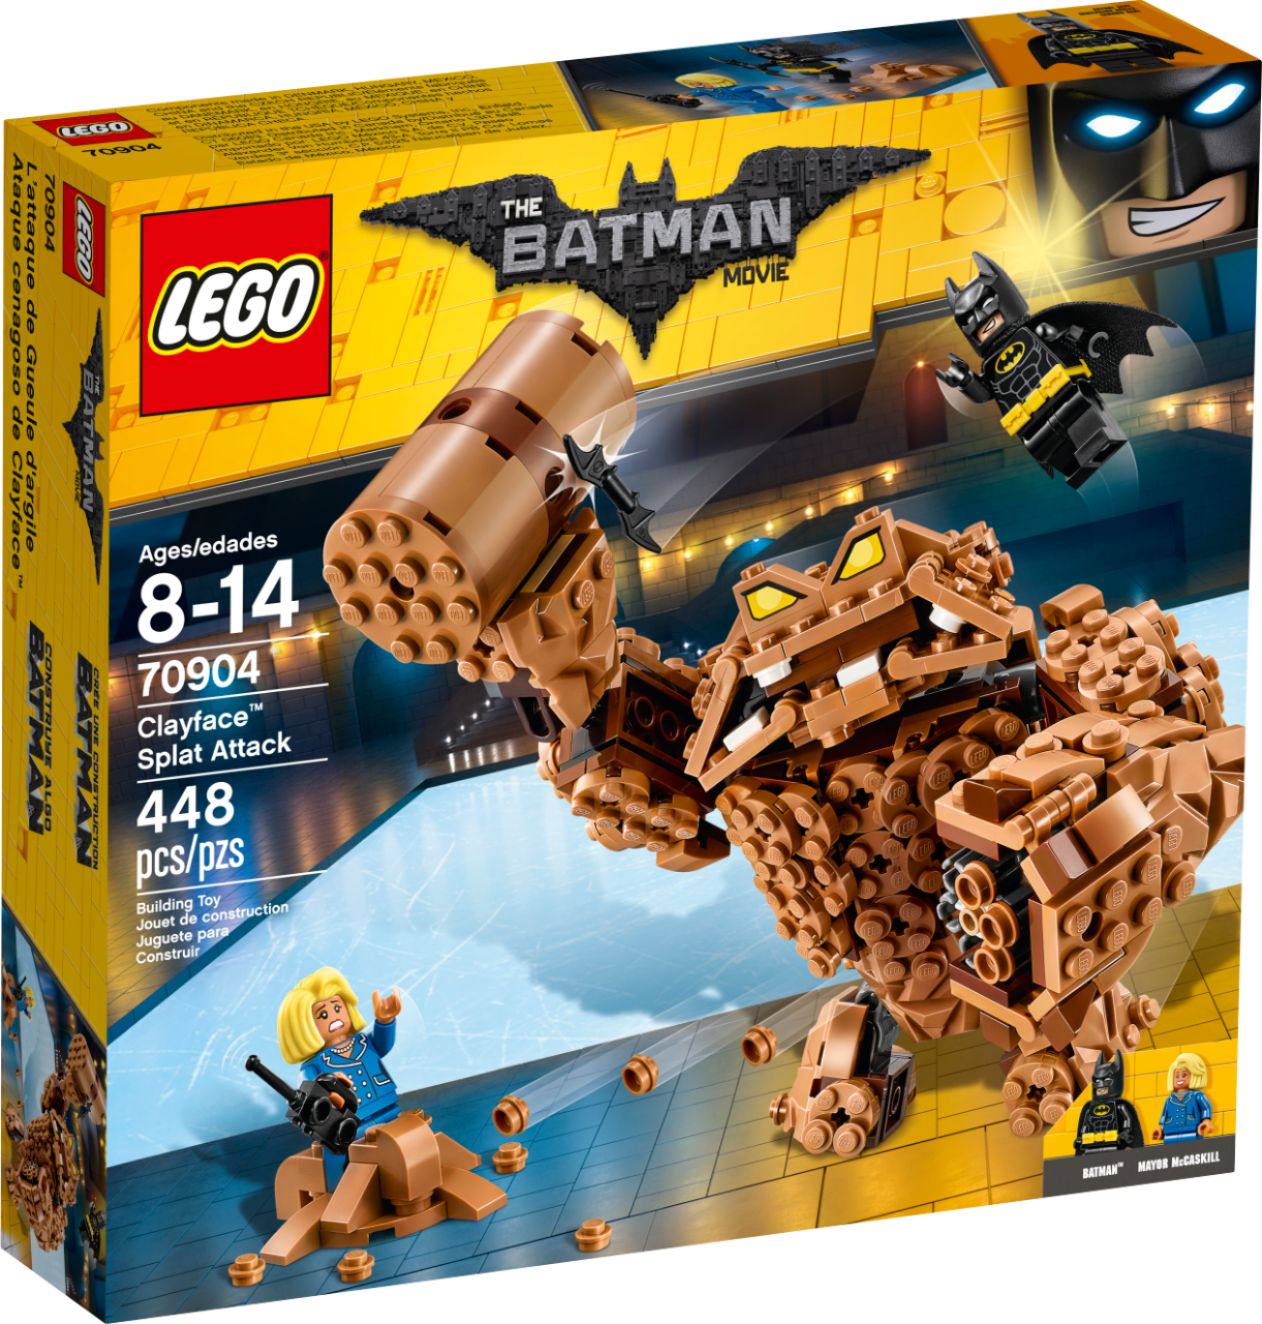 Lego Batman Movie sets by AngryBirdsatSFOT on DeviantArt